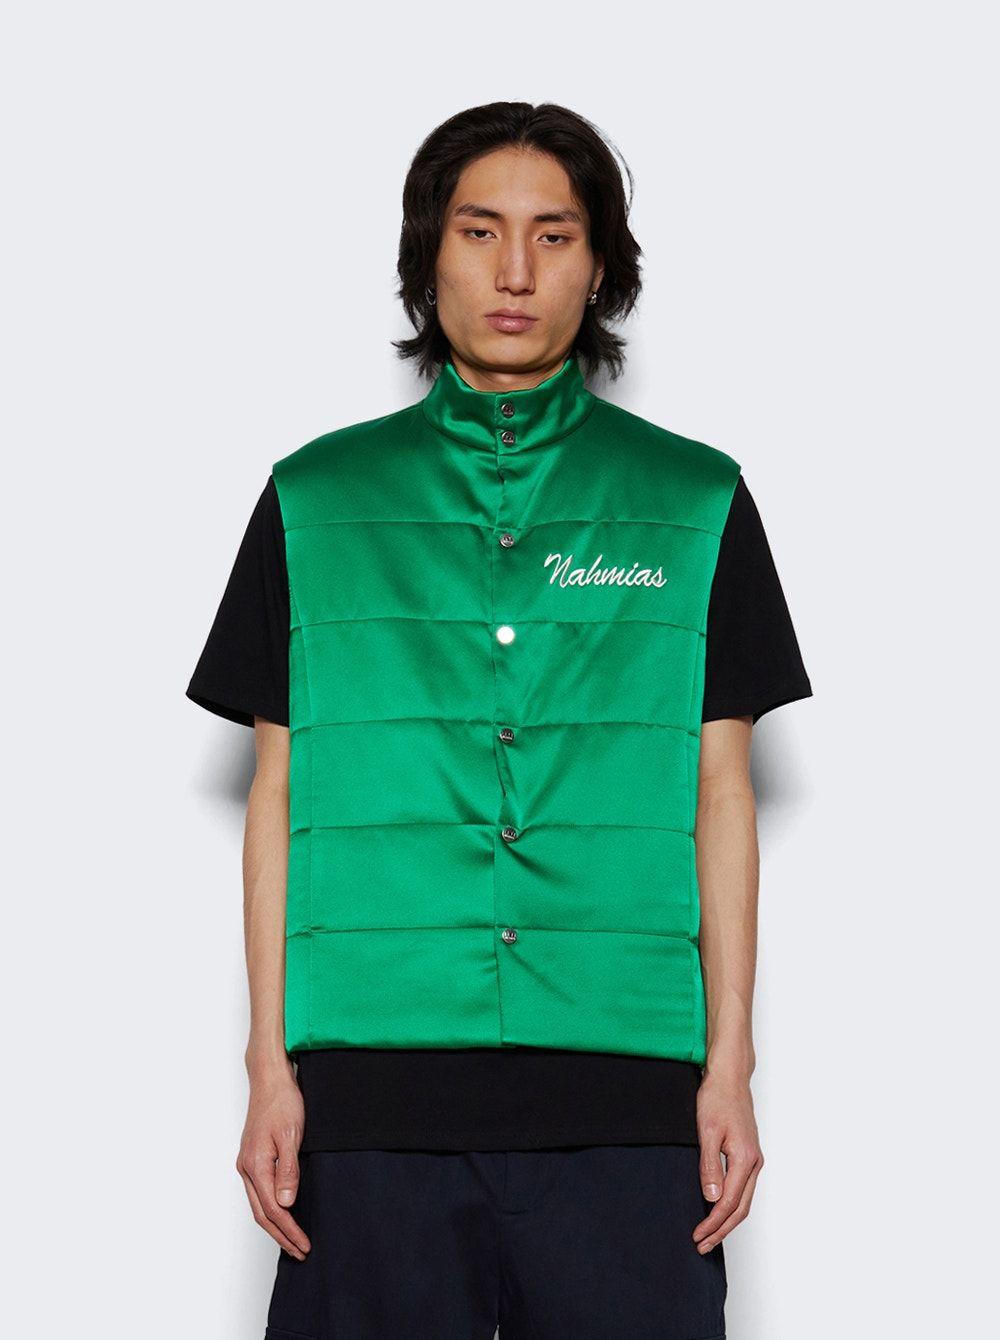 NAHMIAS Miracle Academy Silk Vest in Green for Men